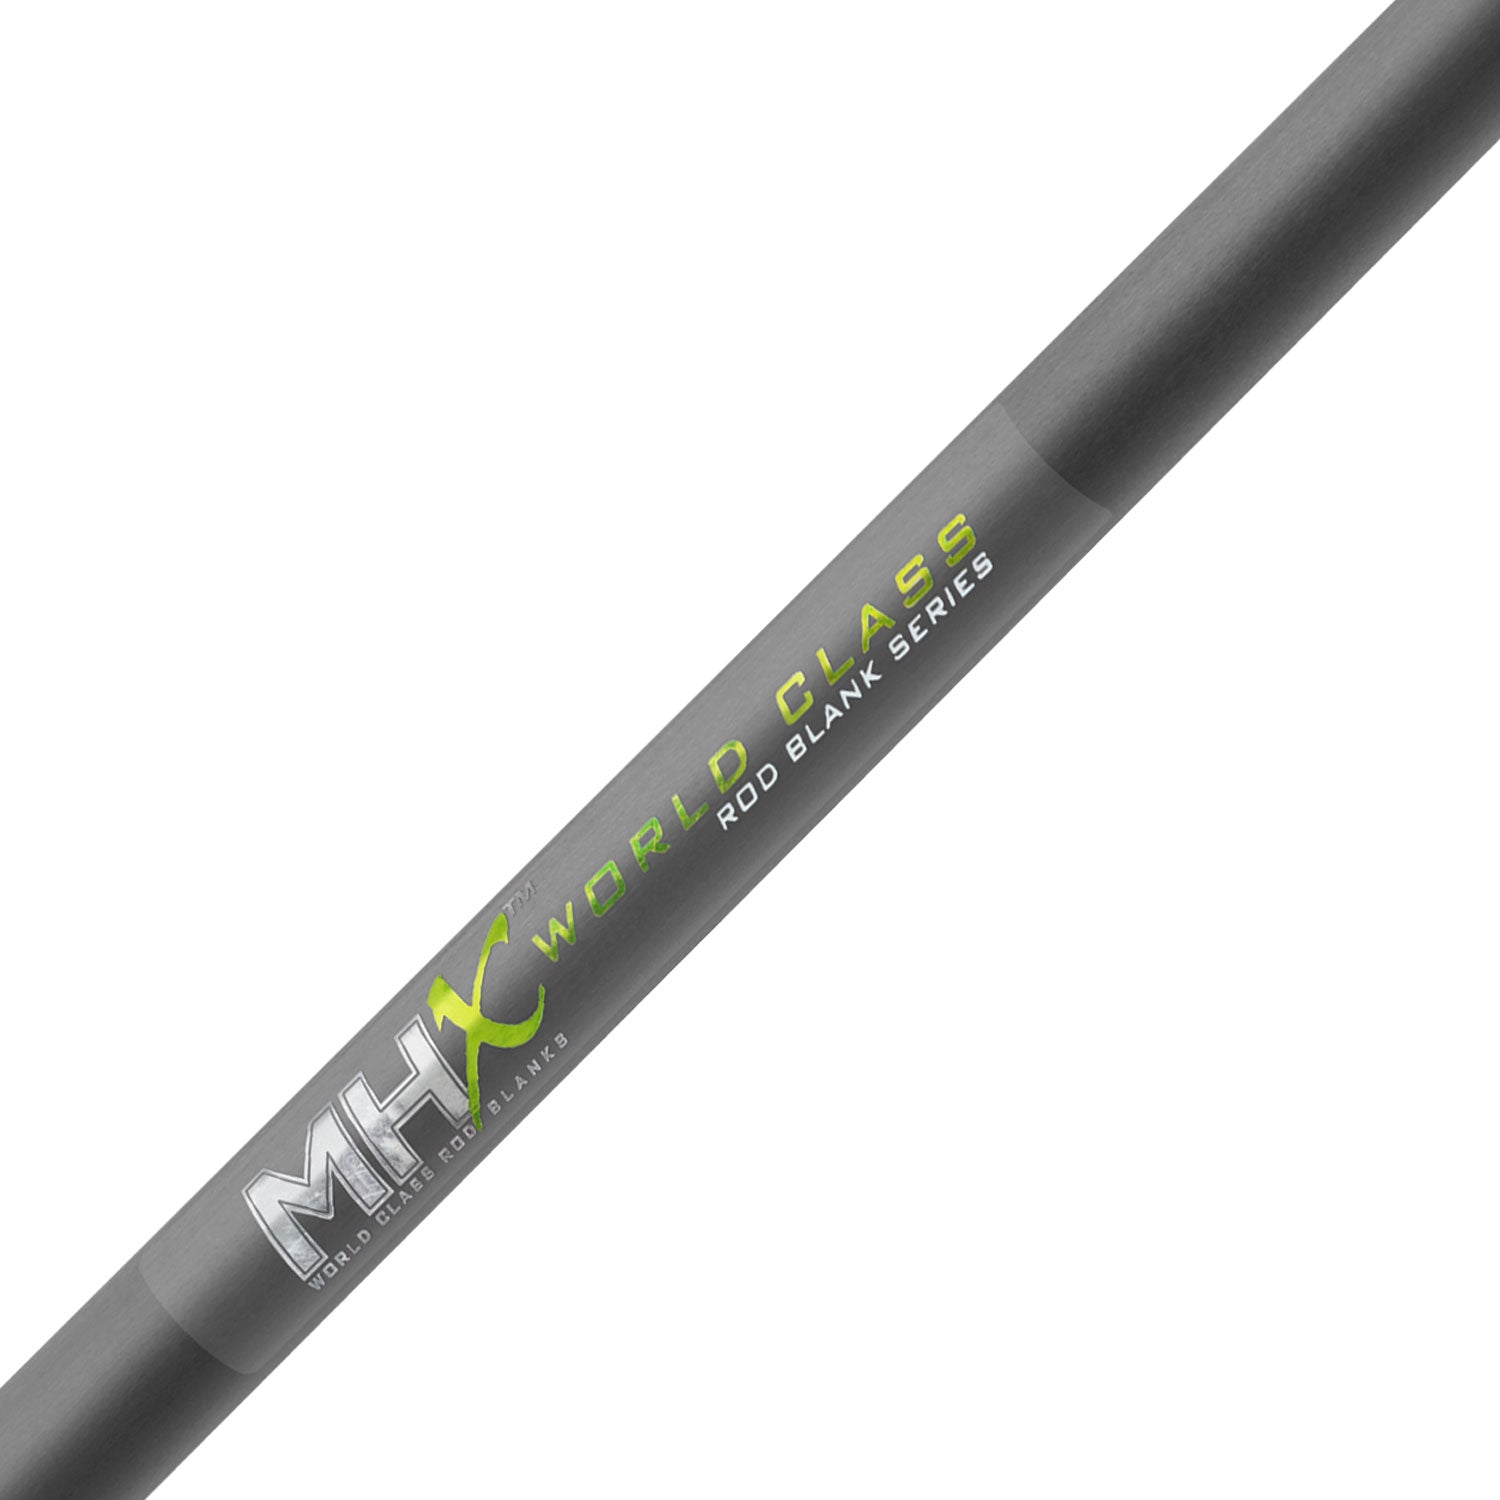 MHX 7'6" Medium Spin Jig Rod Blank - SJ903-MHX